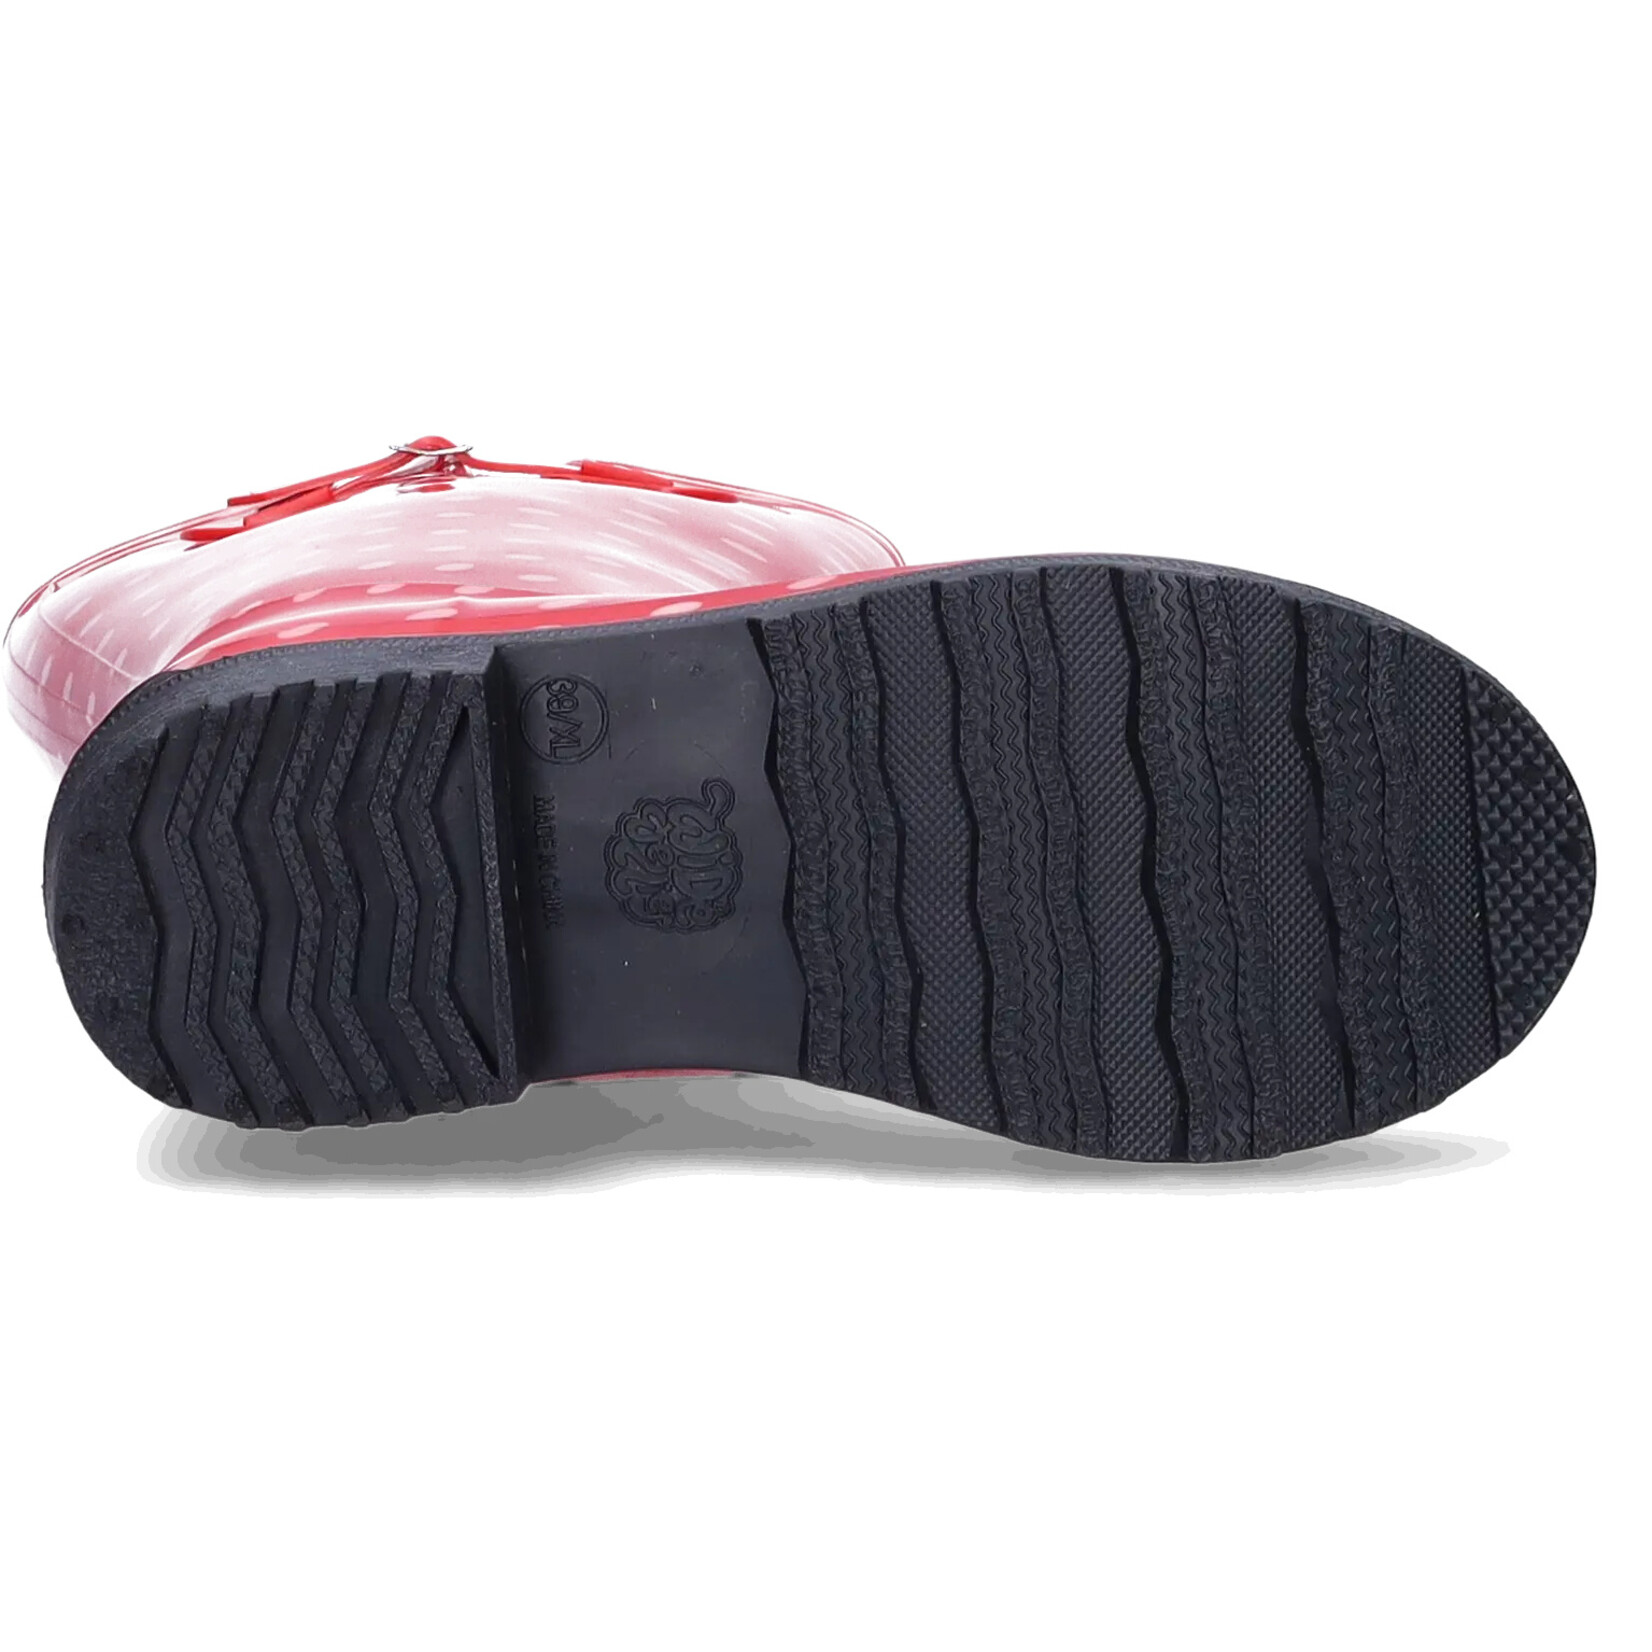 JJ Footwear Wellies - Red/White polka dots